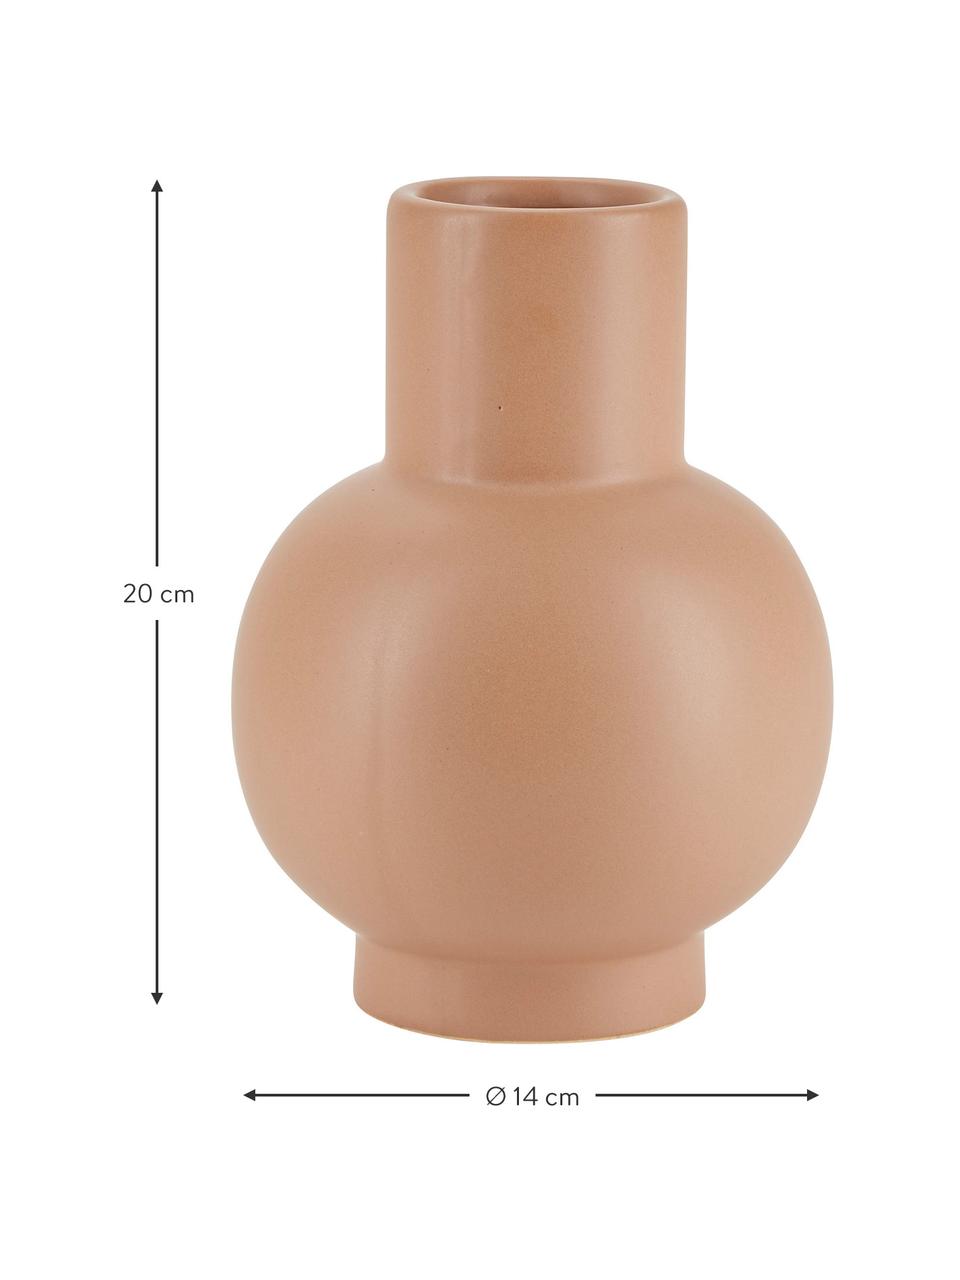 Keramická váza Bobble, Terakotová